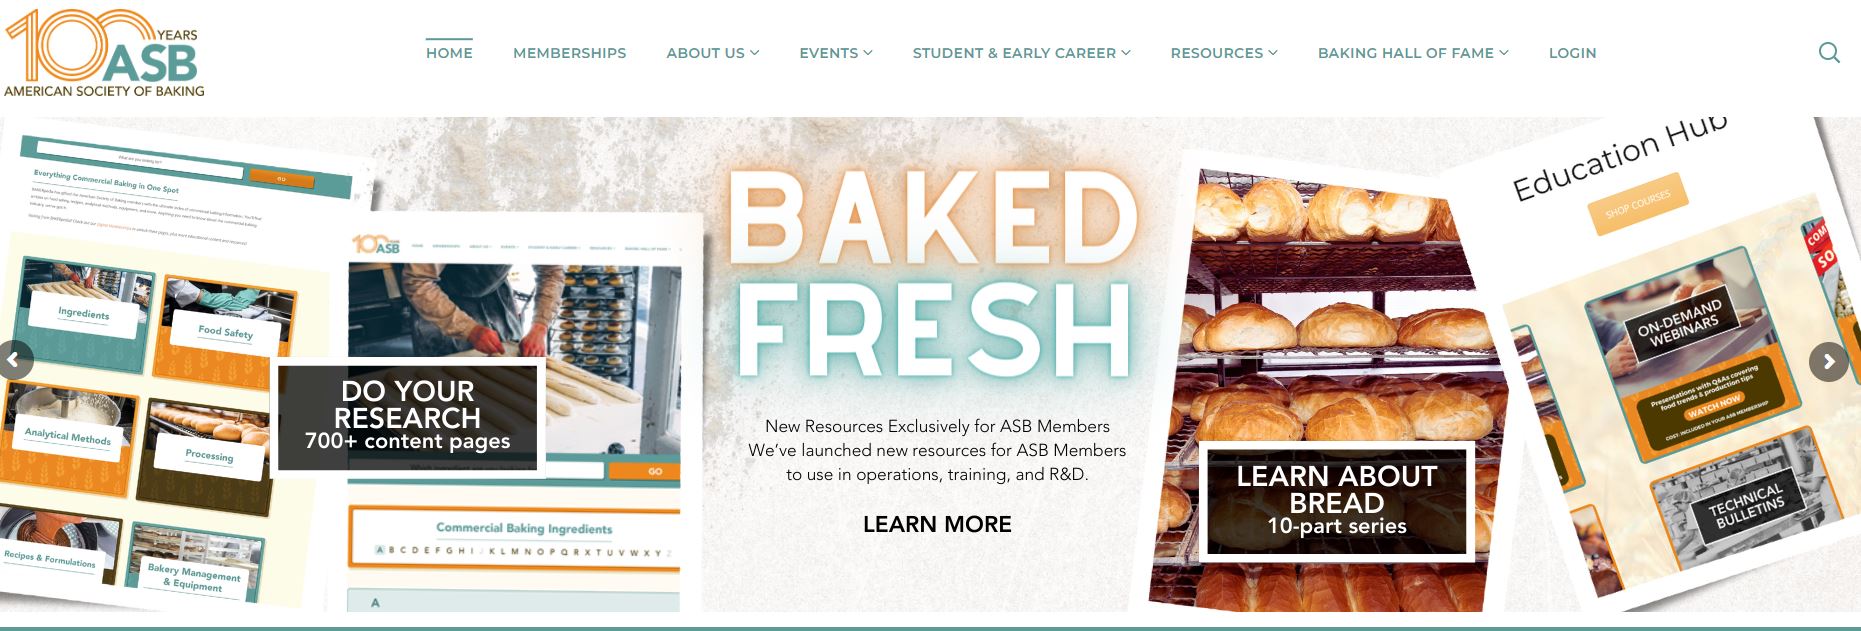 American society of baking website